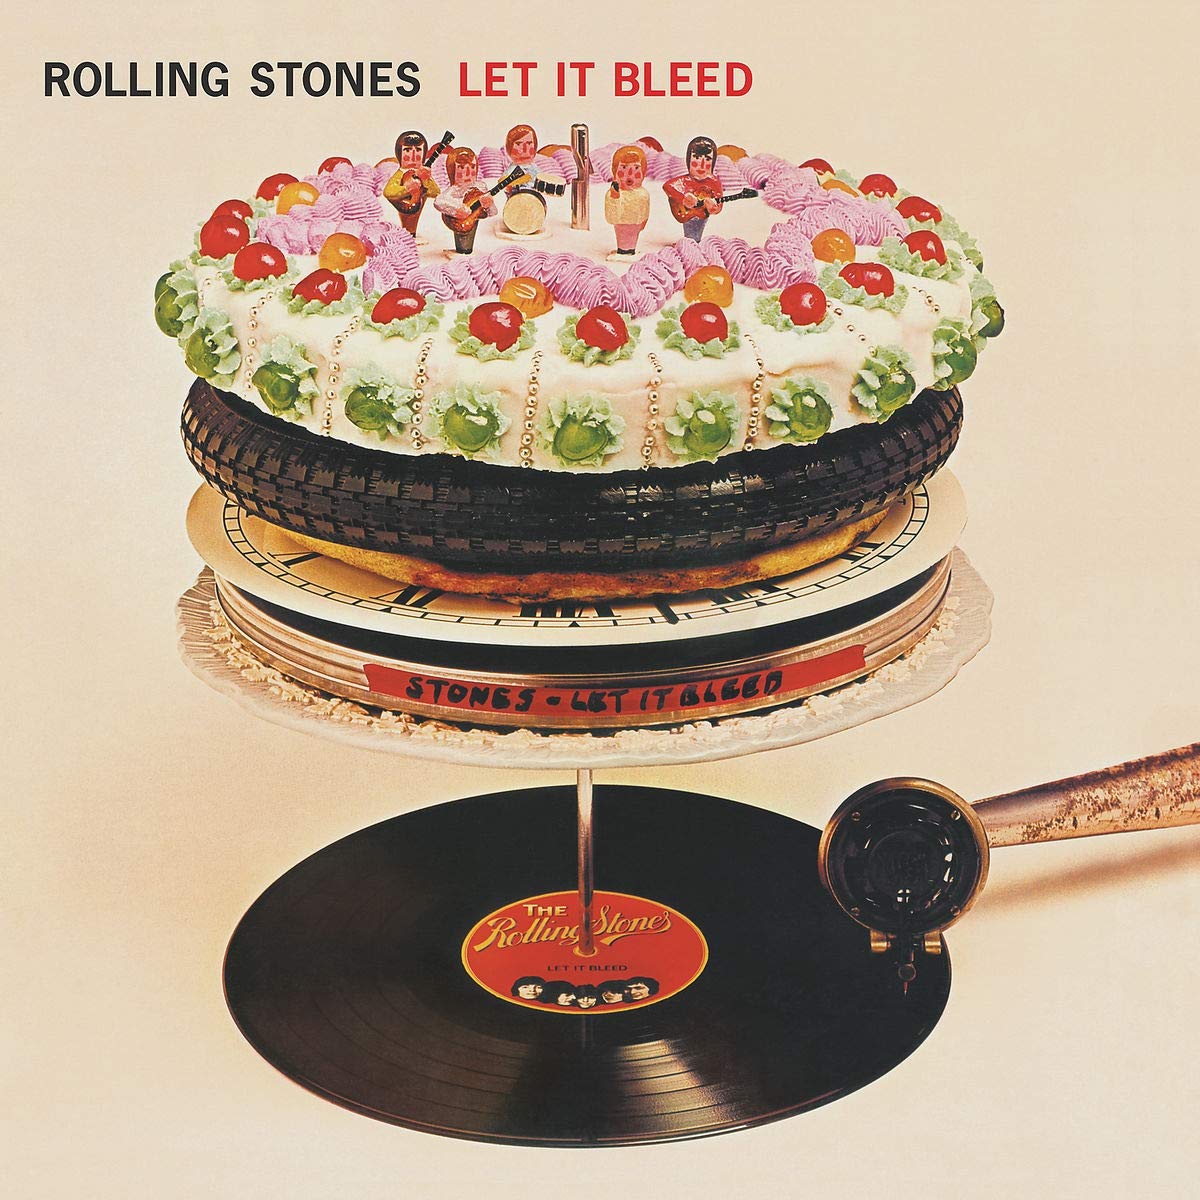 The Rolling Stones "Let It Bleed" LP